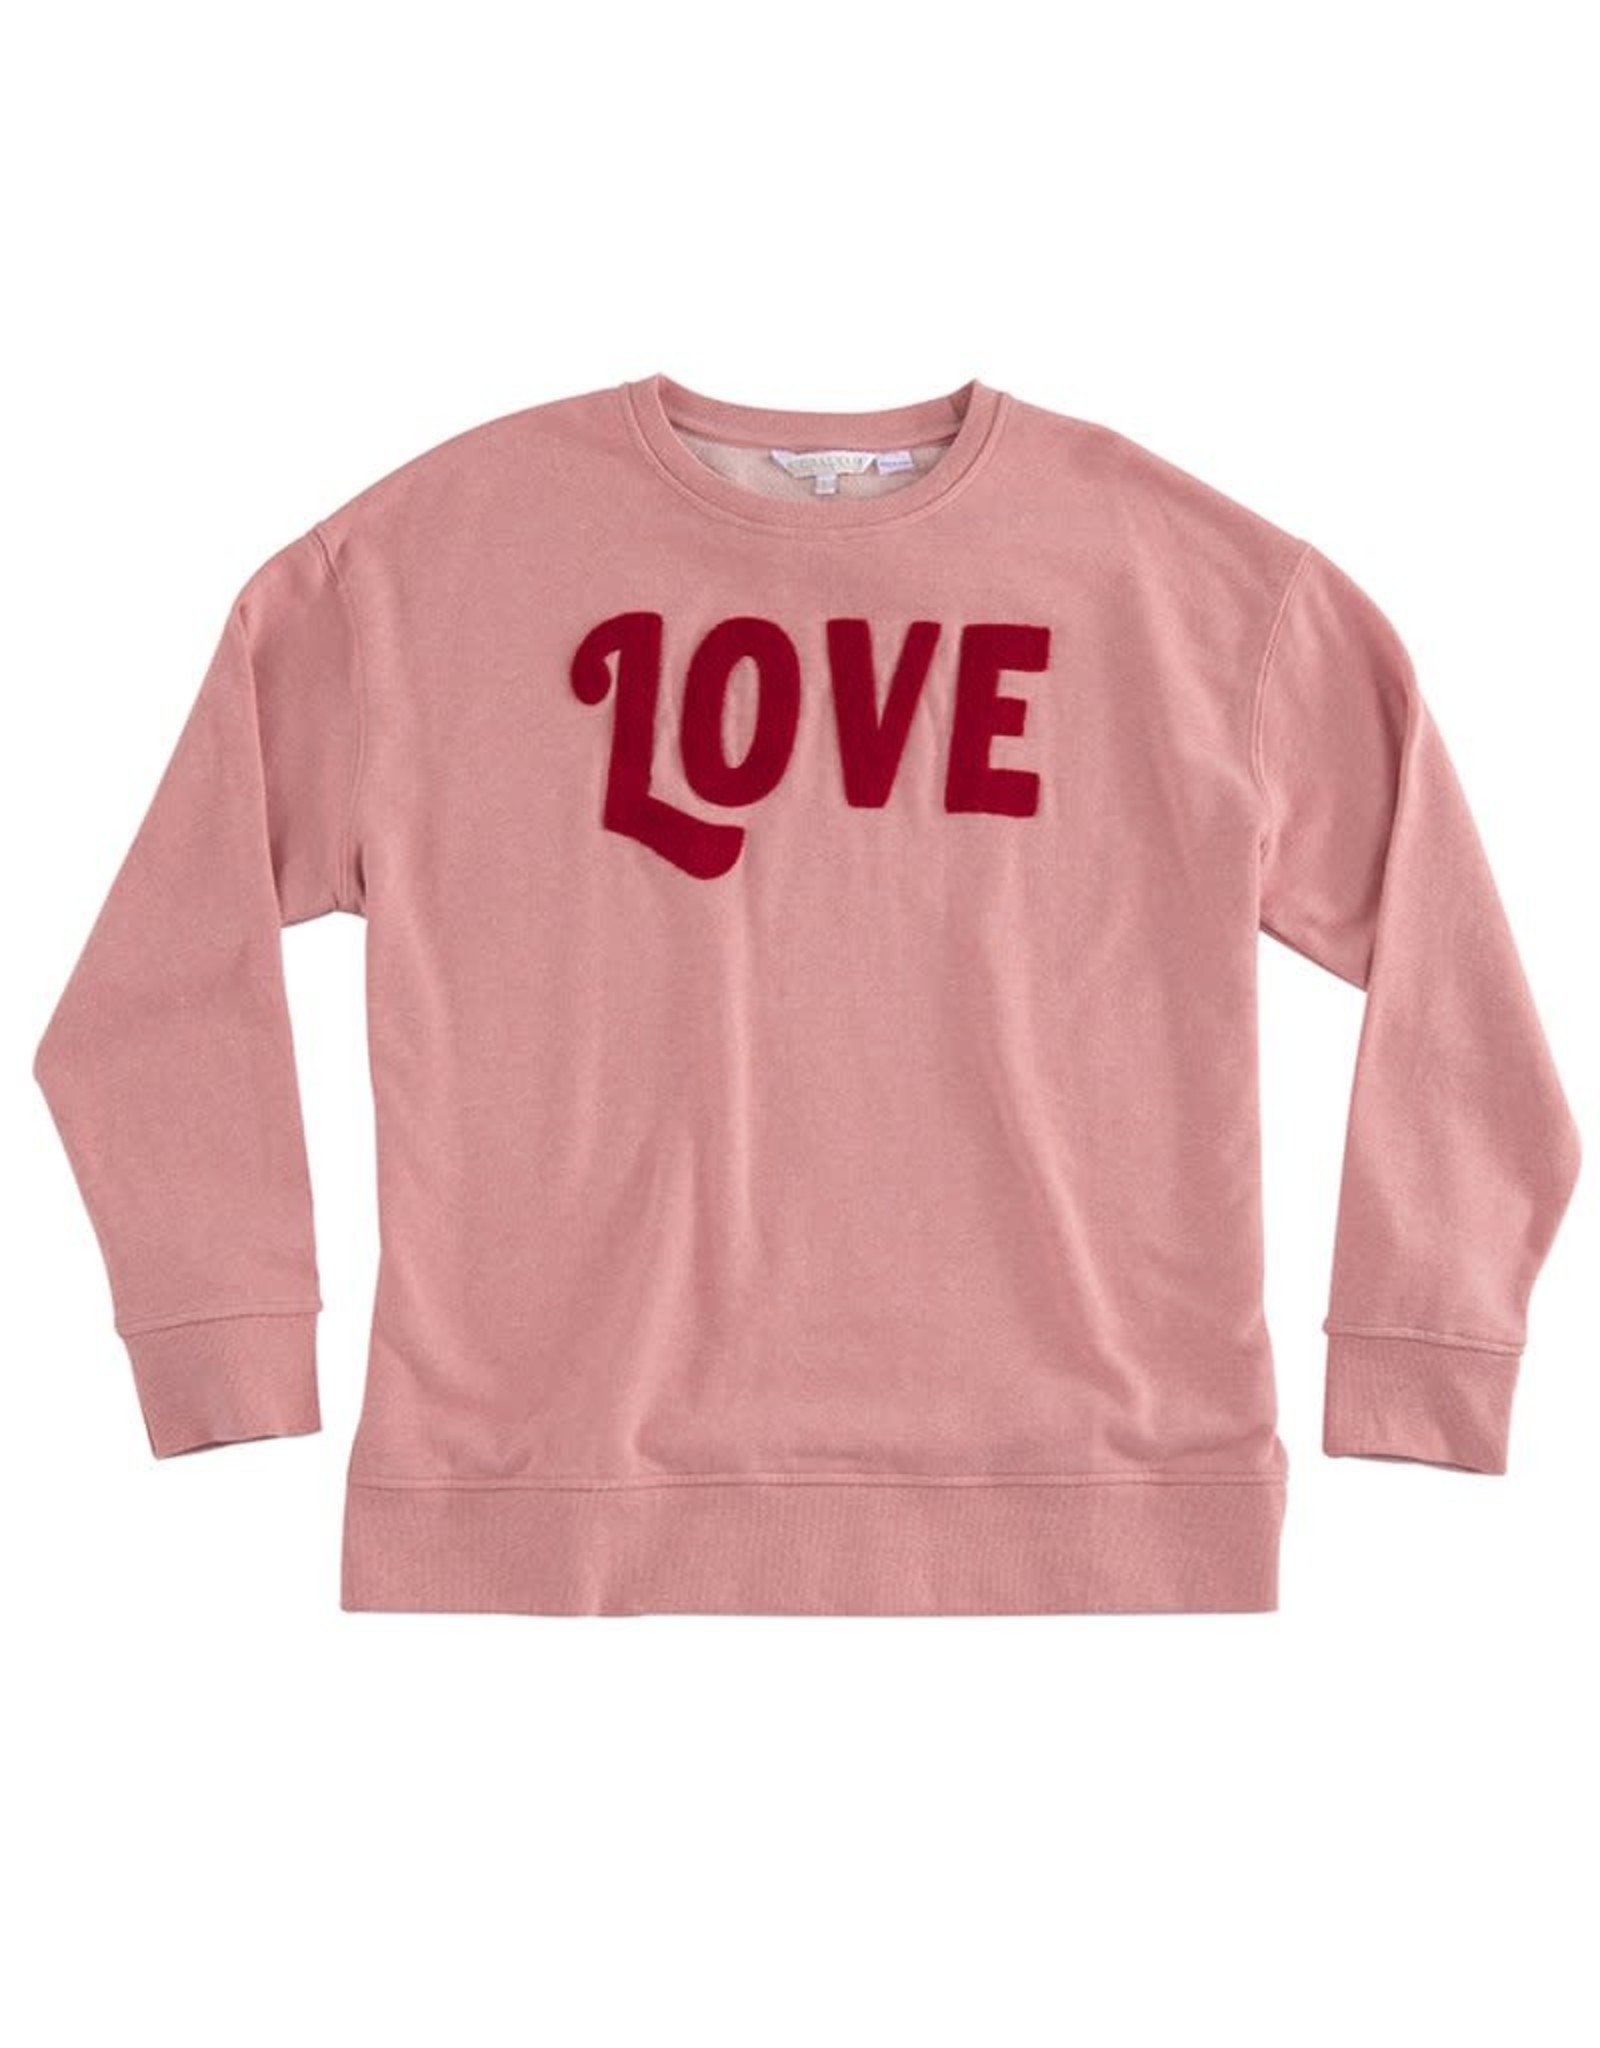 Love Pink & Red Sweatshirt | Pretty Please Houston - Pretty Please ...